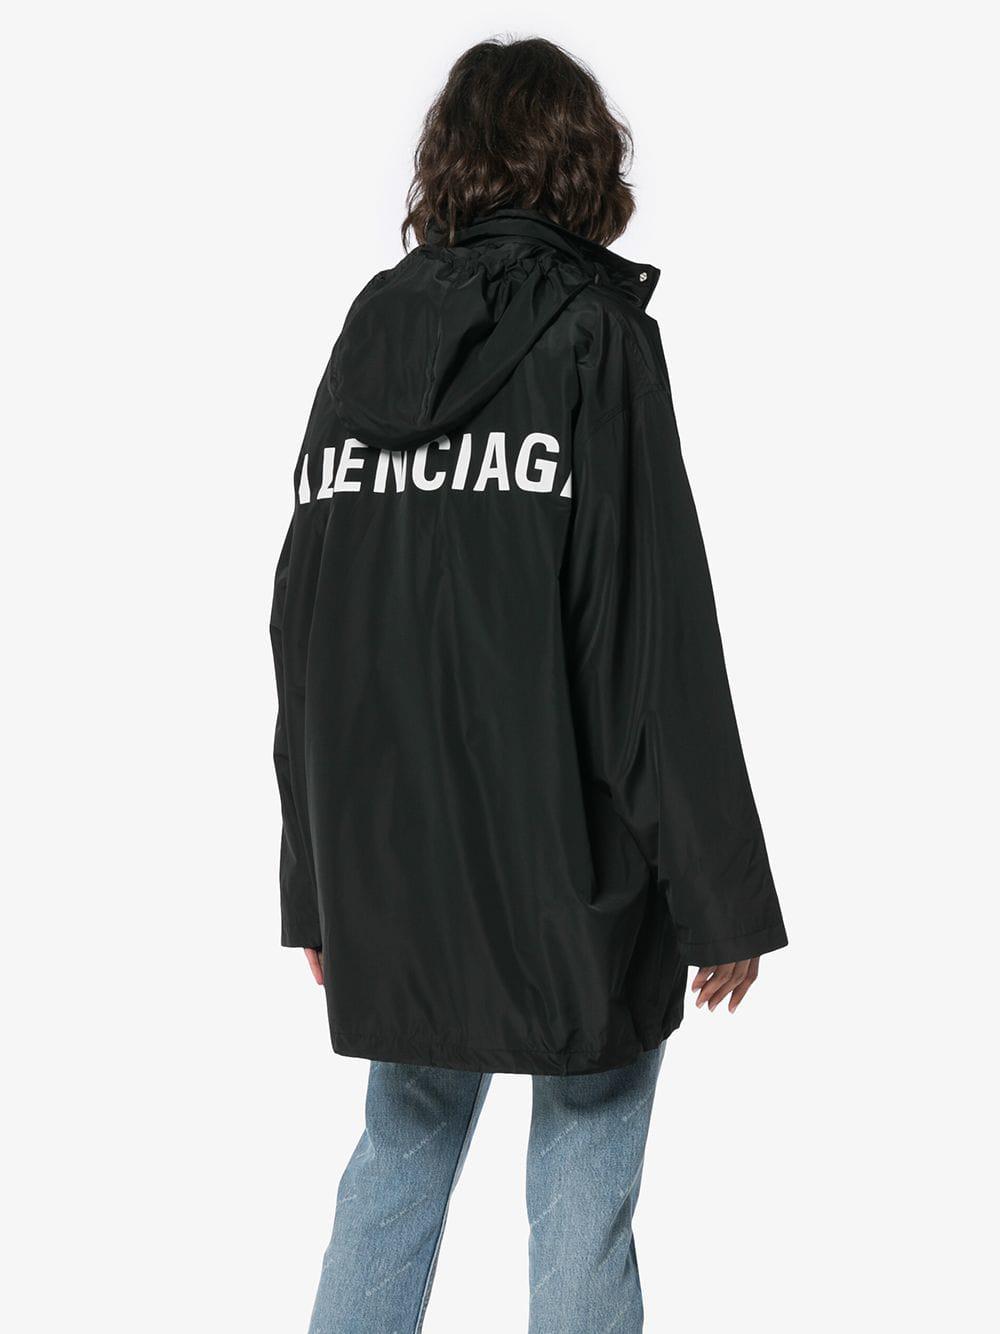 Balenciaga Synthetic Long Print Hooded Windbreaker Jacket in Black | Lyst